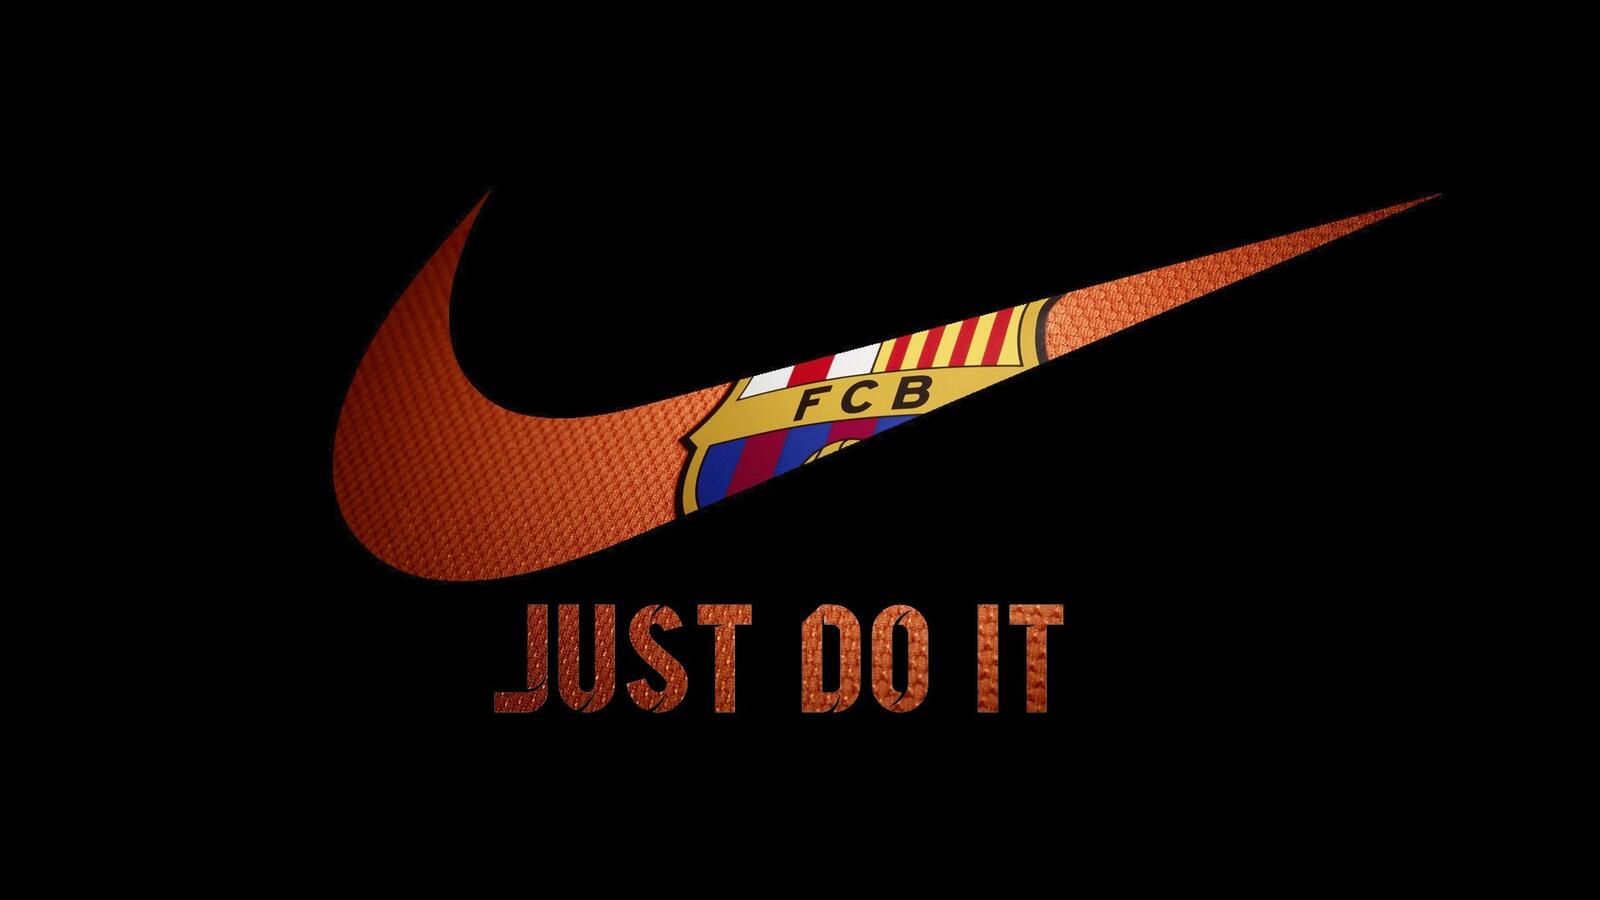 Wallpapers FC Barcelona logo nike on the desktop